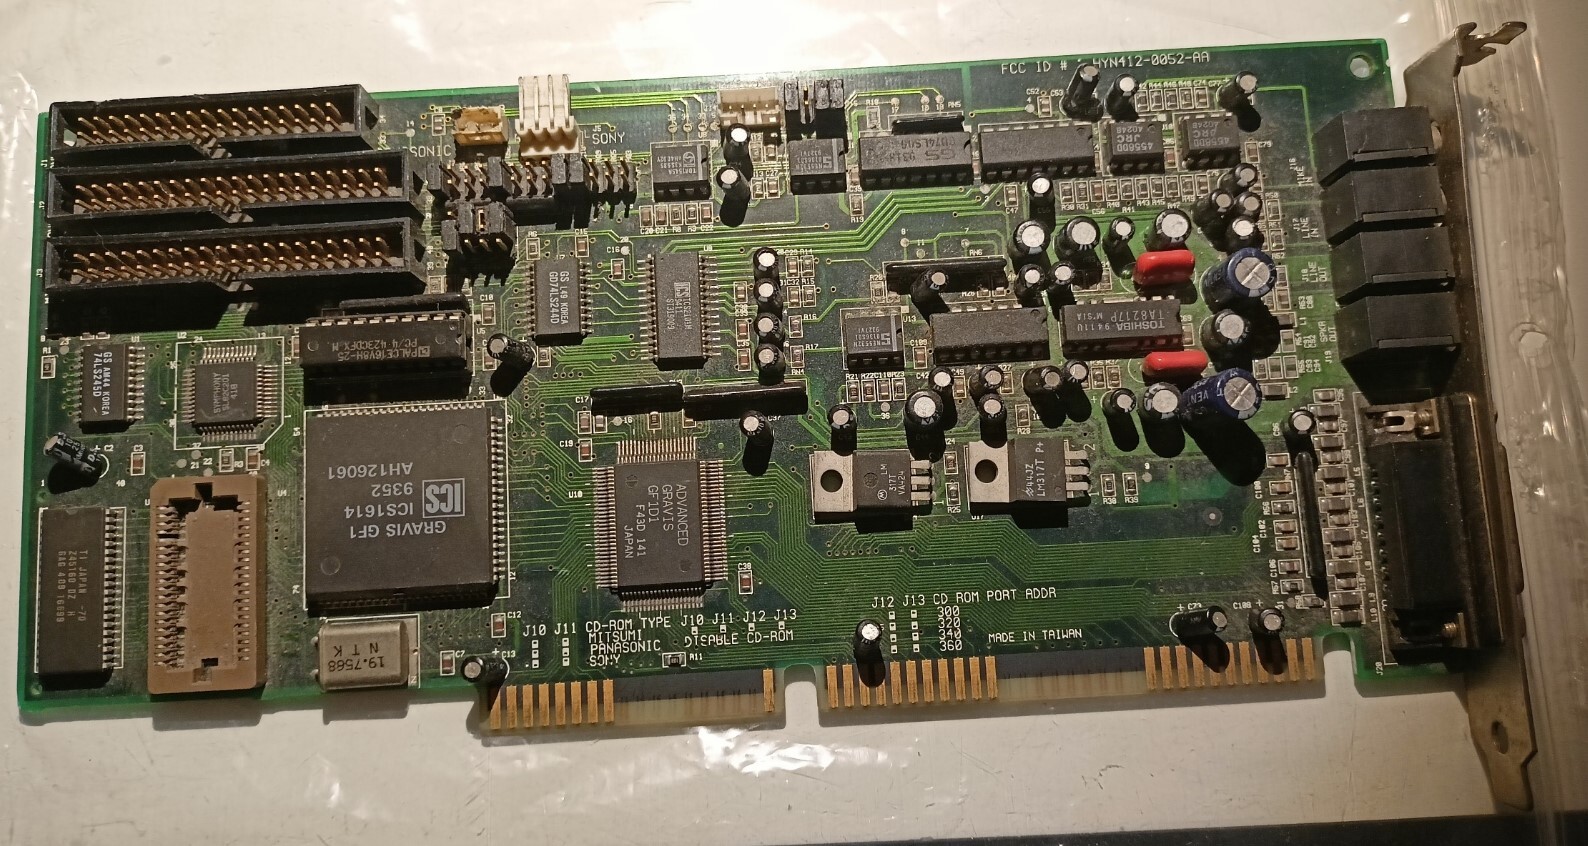  [Ech] Atari 1040STE / Amstrad CPC464 / Clone Gravis Ultrasound / Etc [Don] Carrosserie A500+ HS / Ecran Atari SC1435 HS 9ivc